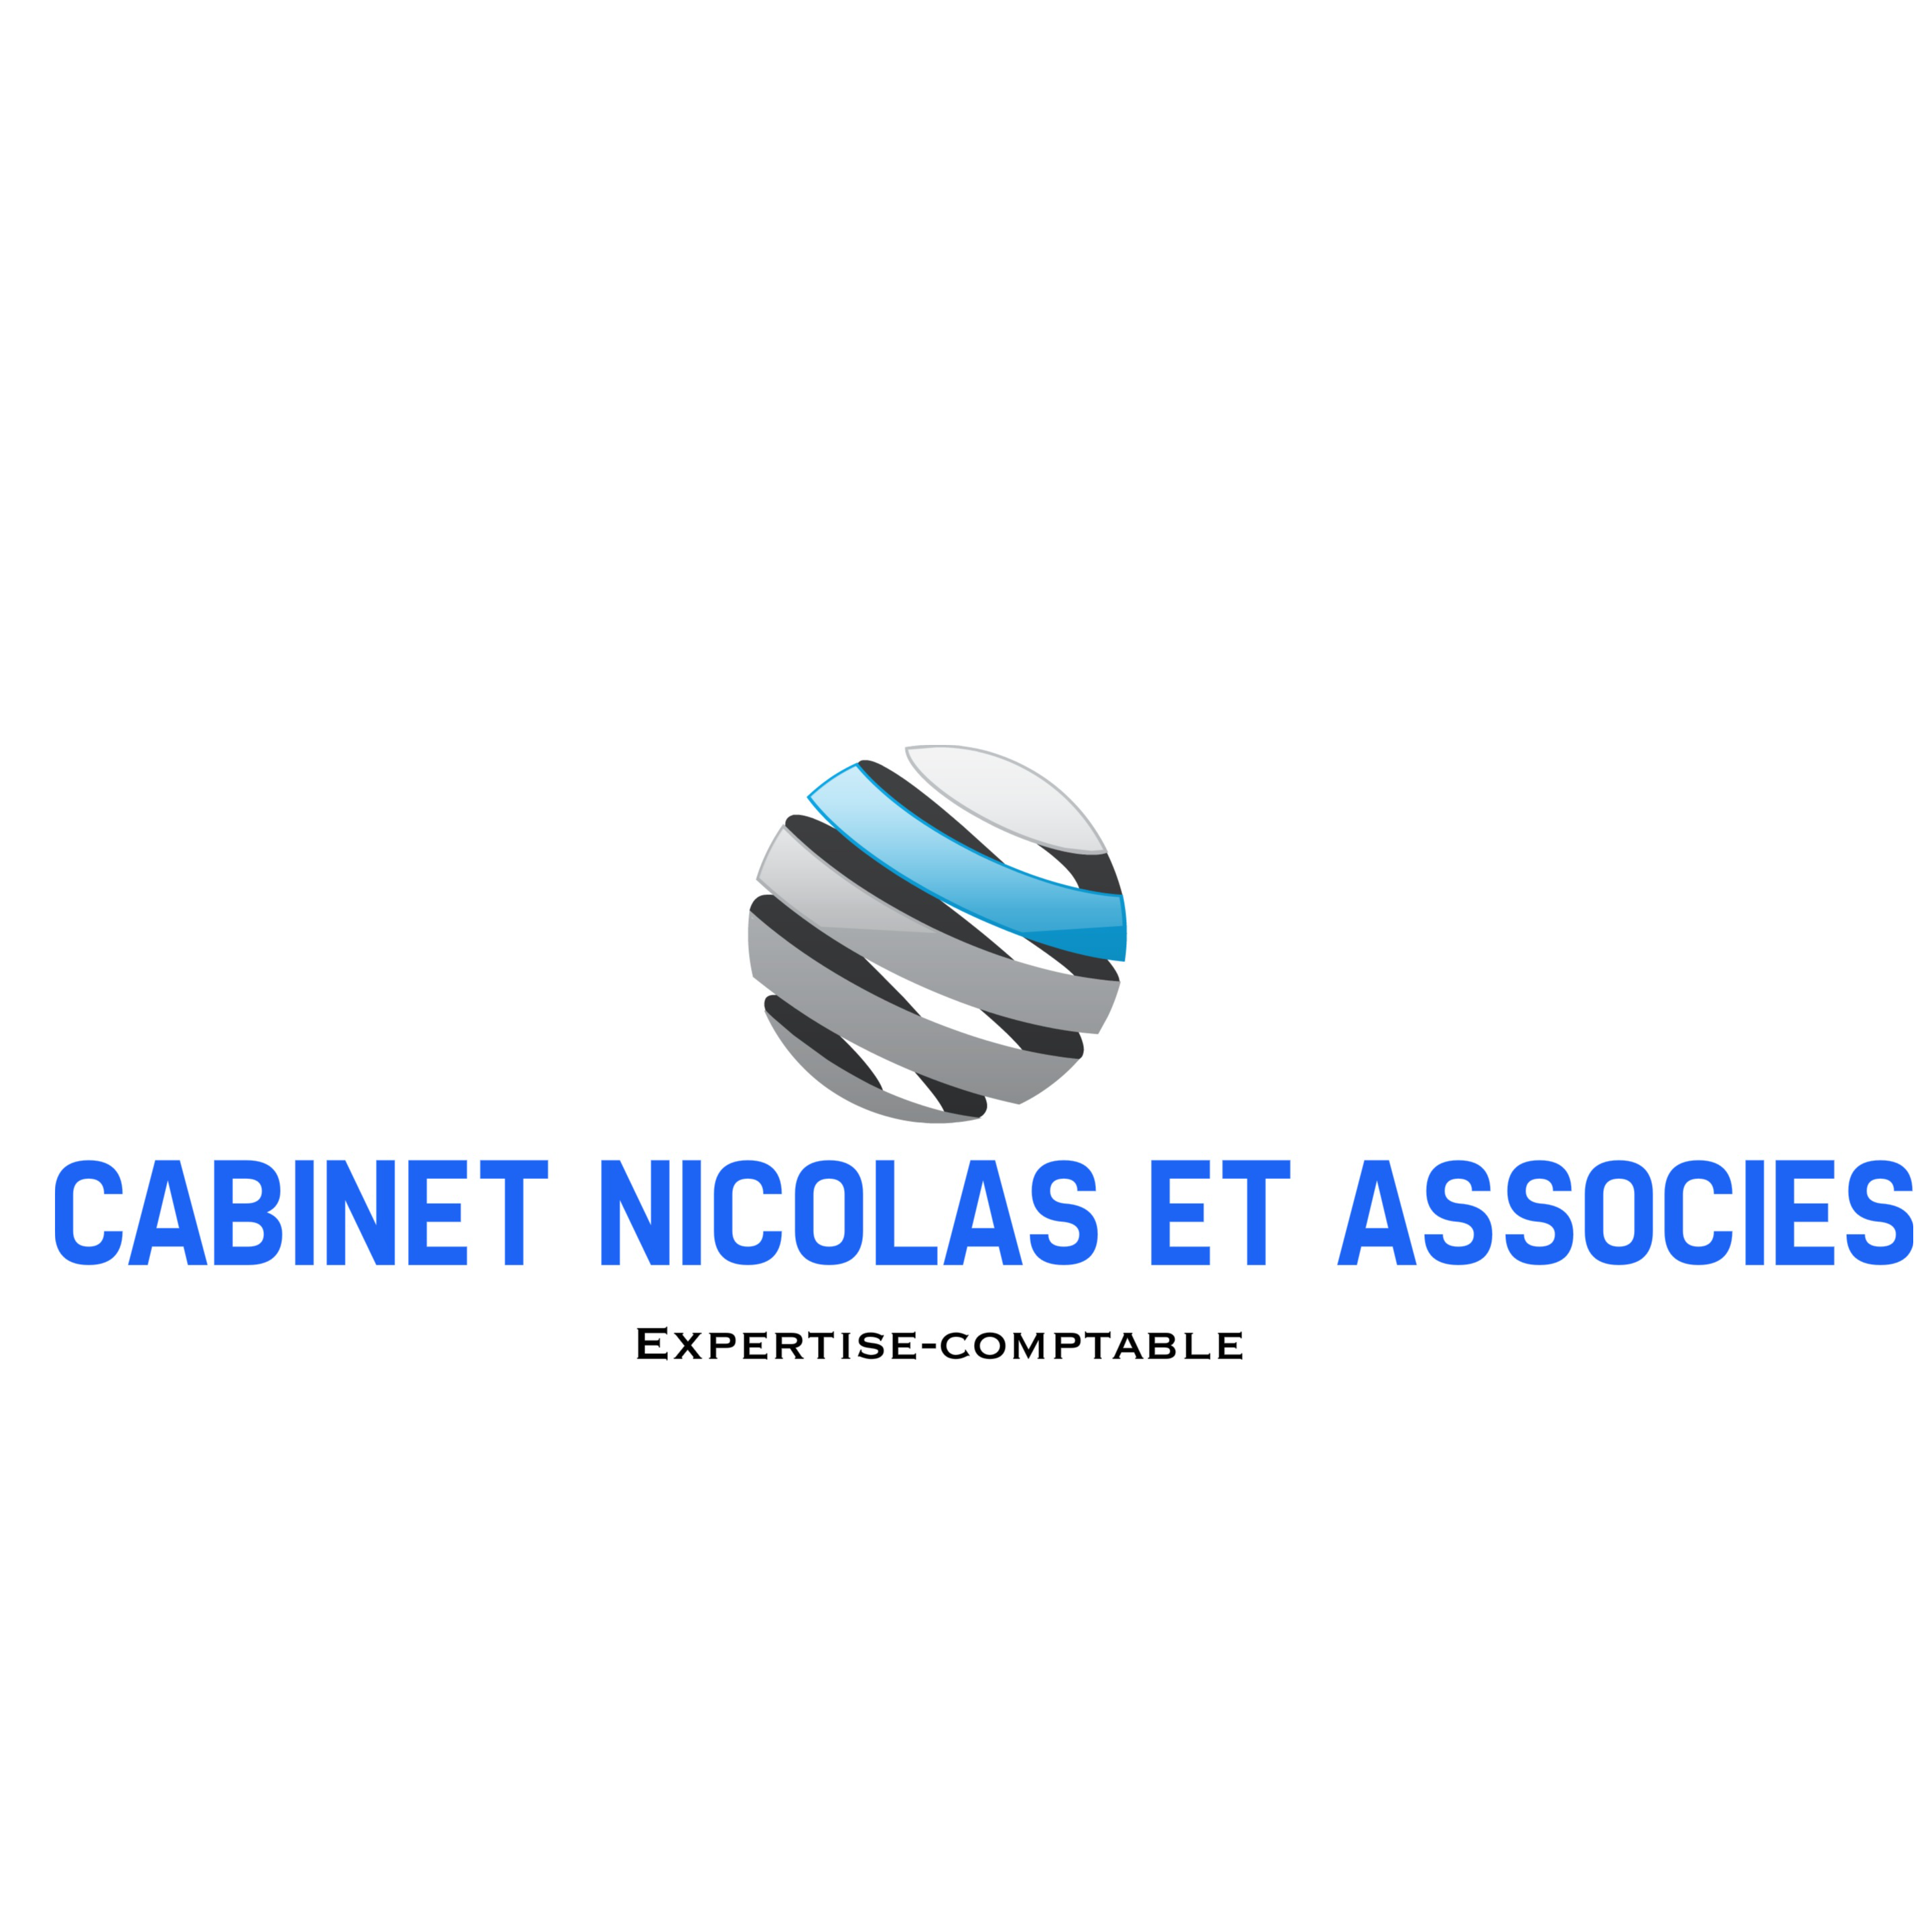 CABINET NICOLAS ET ASSOCIES – Expert-comptable logo